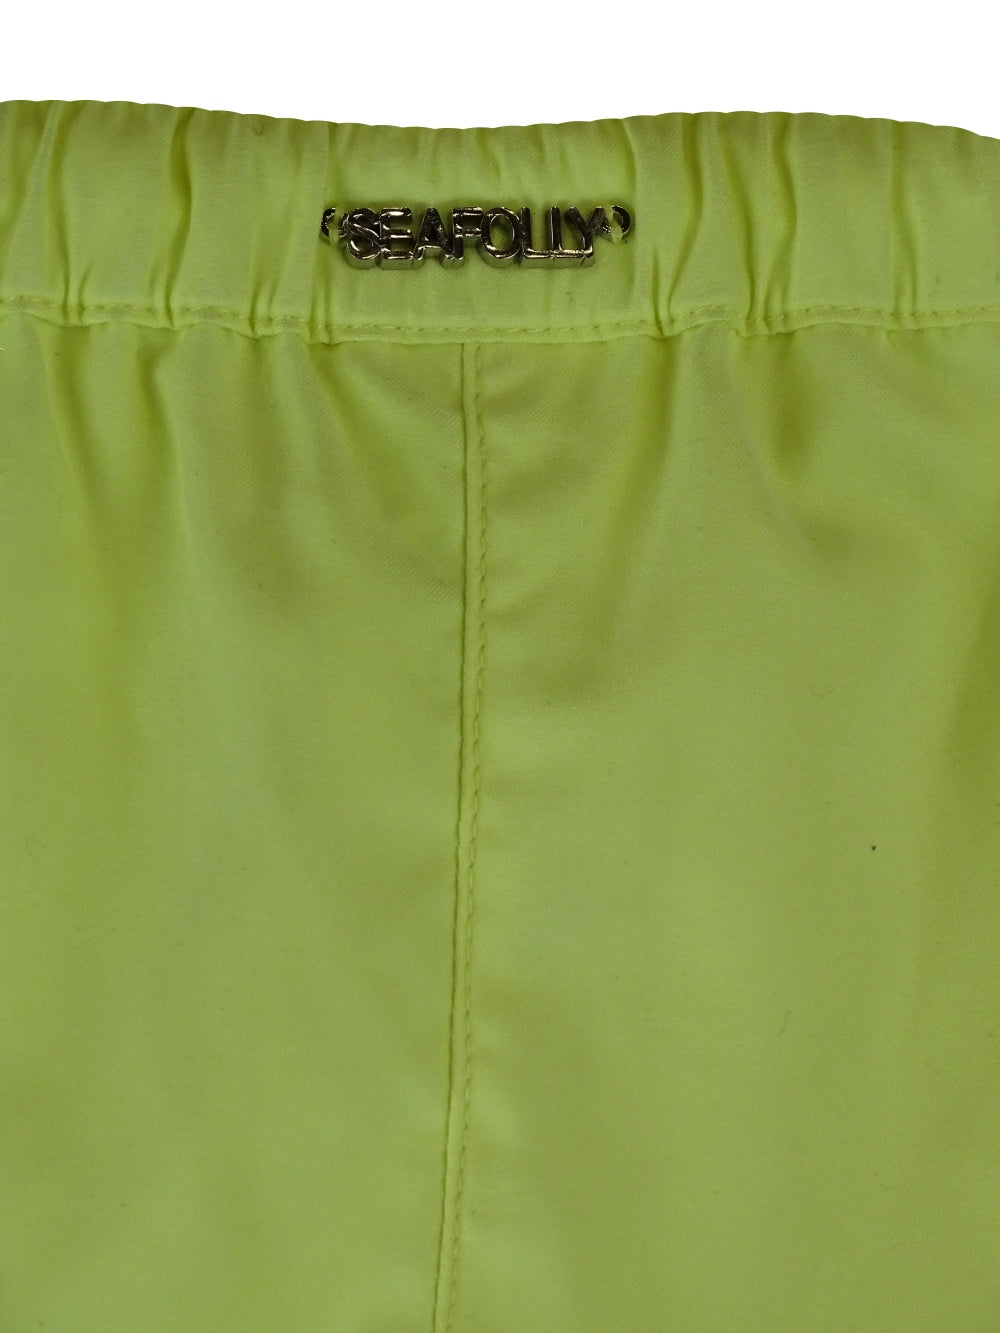 Seafolly Yellow Shorts S